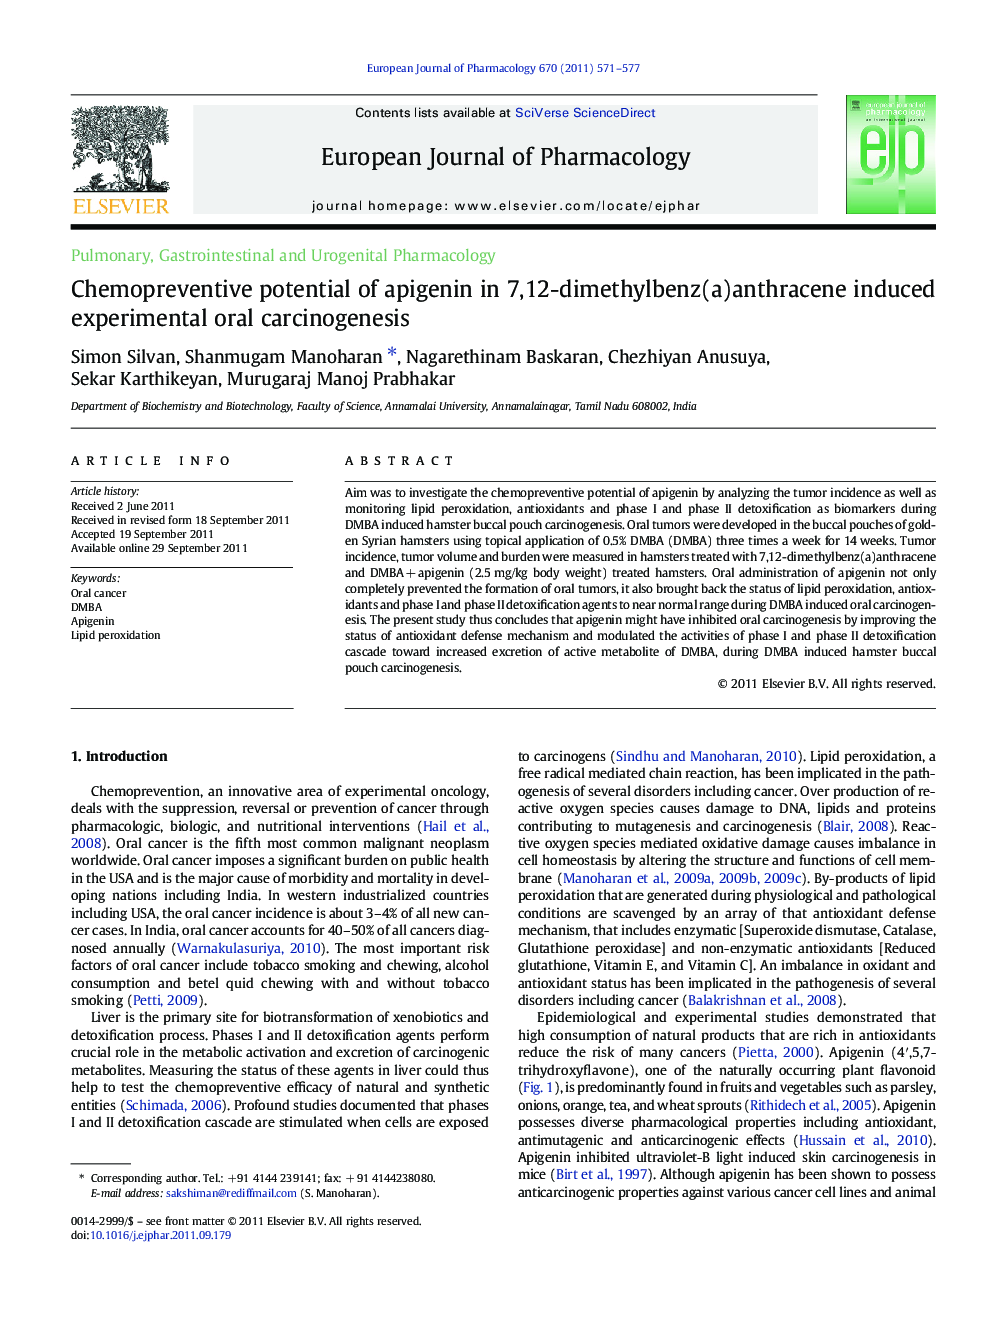 Pulmonary, Gastrointestinal and Urogenital PharmacologyChemopreventive potential of apigenin in 7,12-dimethylbenz(a)anthracene induced experimental oral carcinogenesis